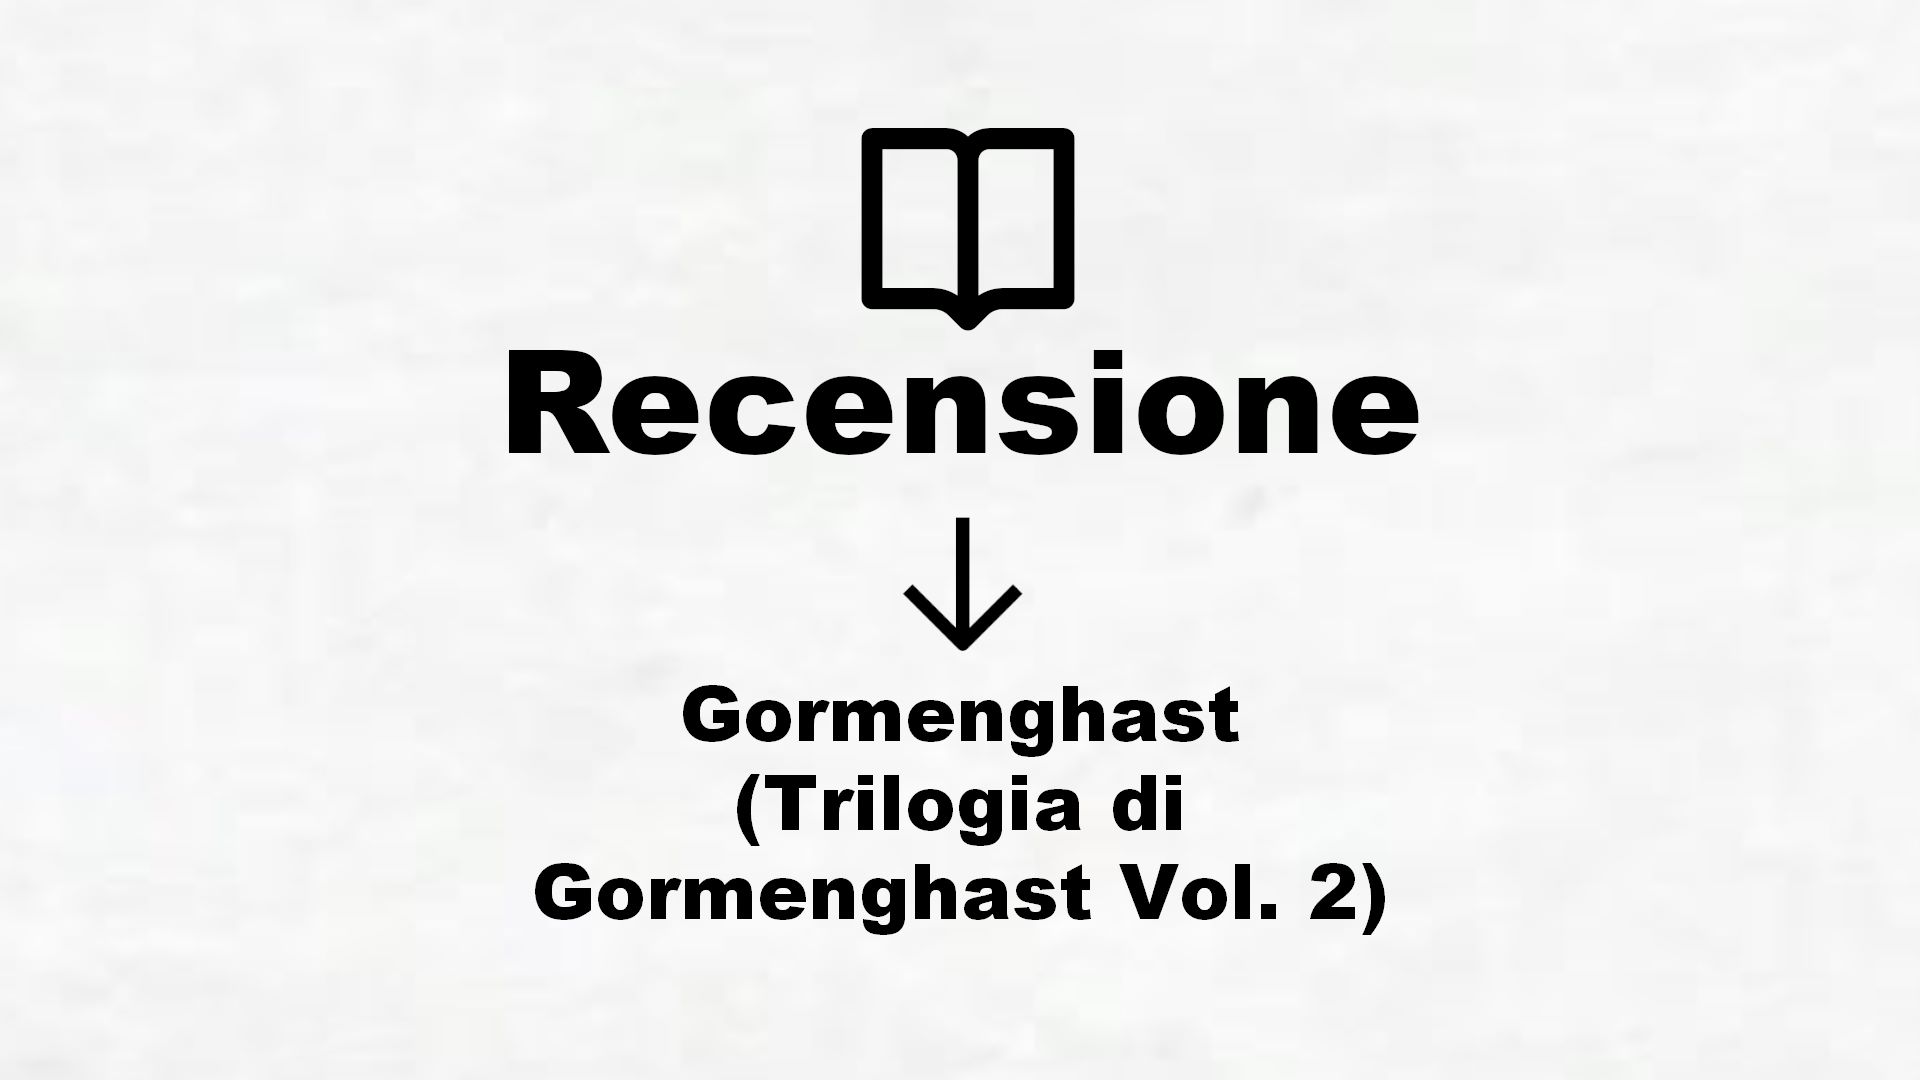 Gormenghast (Trilogia di Gormenghast Vol. 2) – Recensione Libro